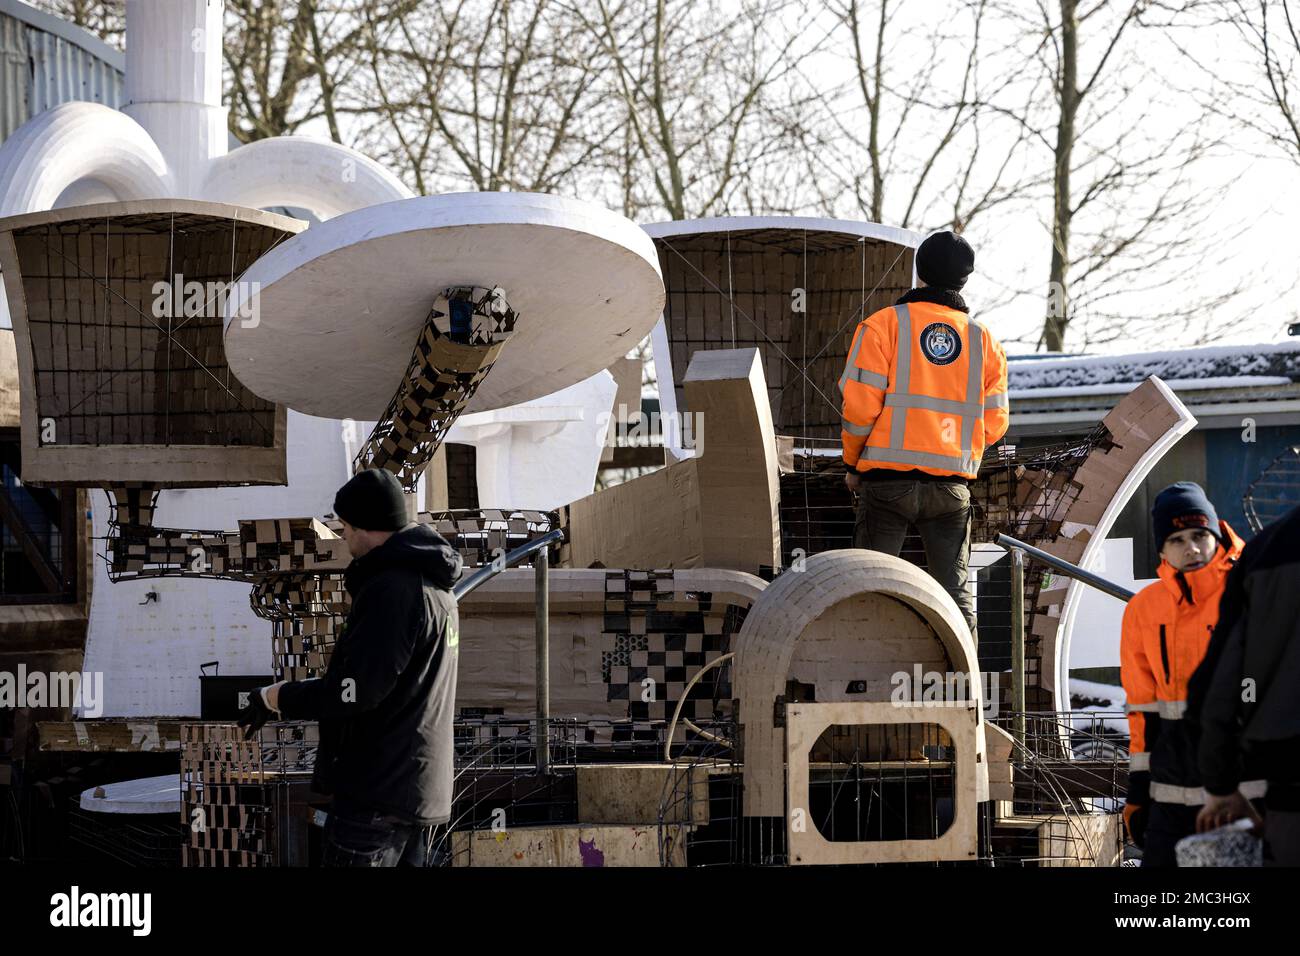 OIRSCHOT - membri di un'associazione di carnevale pratica di assemblare un galleggiante. Il Carnevale si celebra nel sud del paese nel mese di febbraio. ANP ROB ENGELAAR netherlands OUT - belgium OUT Credit: ANP/Alamy Live News Foto Stock